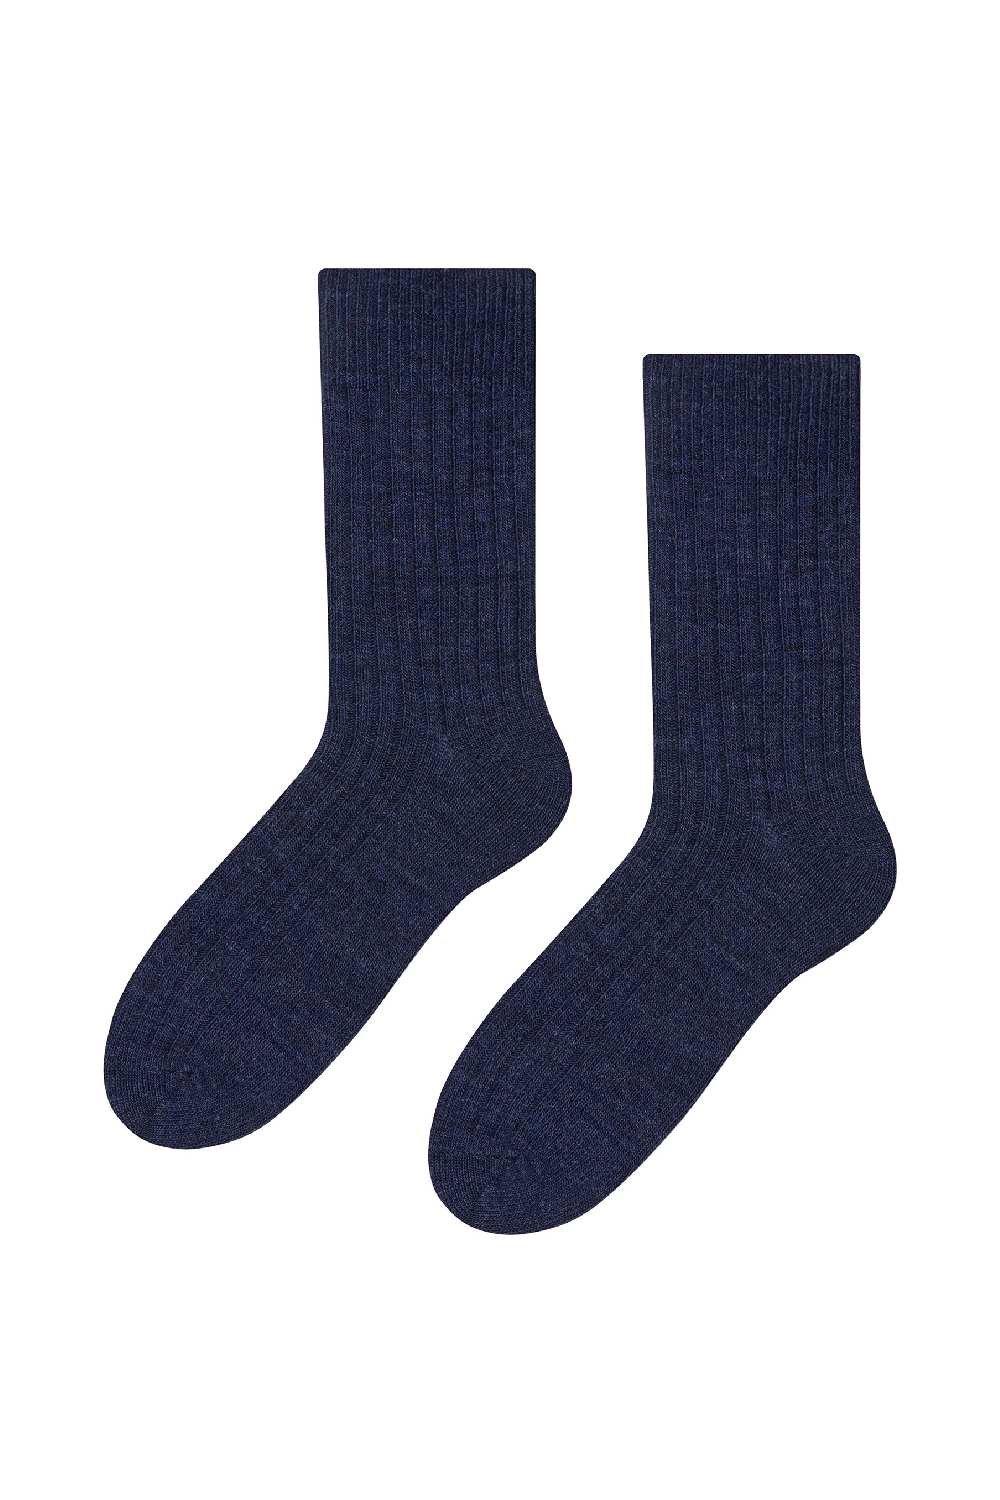 Alpaca Wool Socks for Winter Knitted Crew Boot Socks